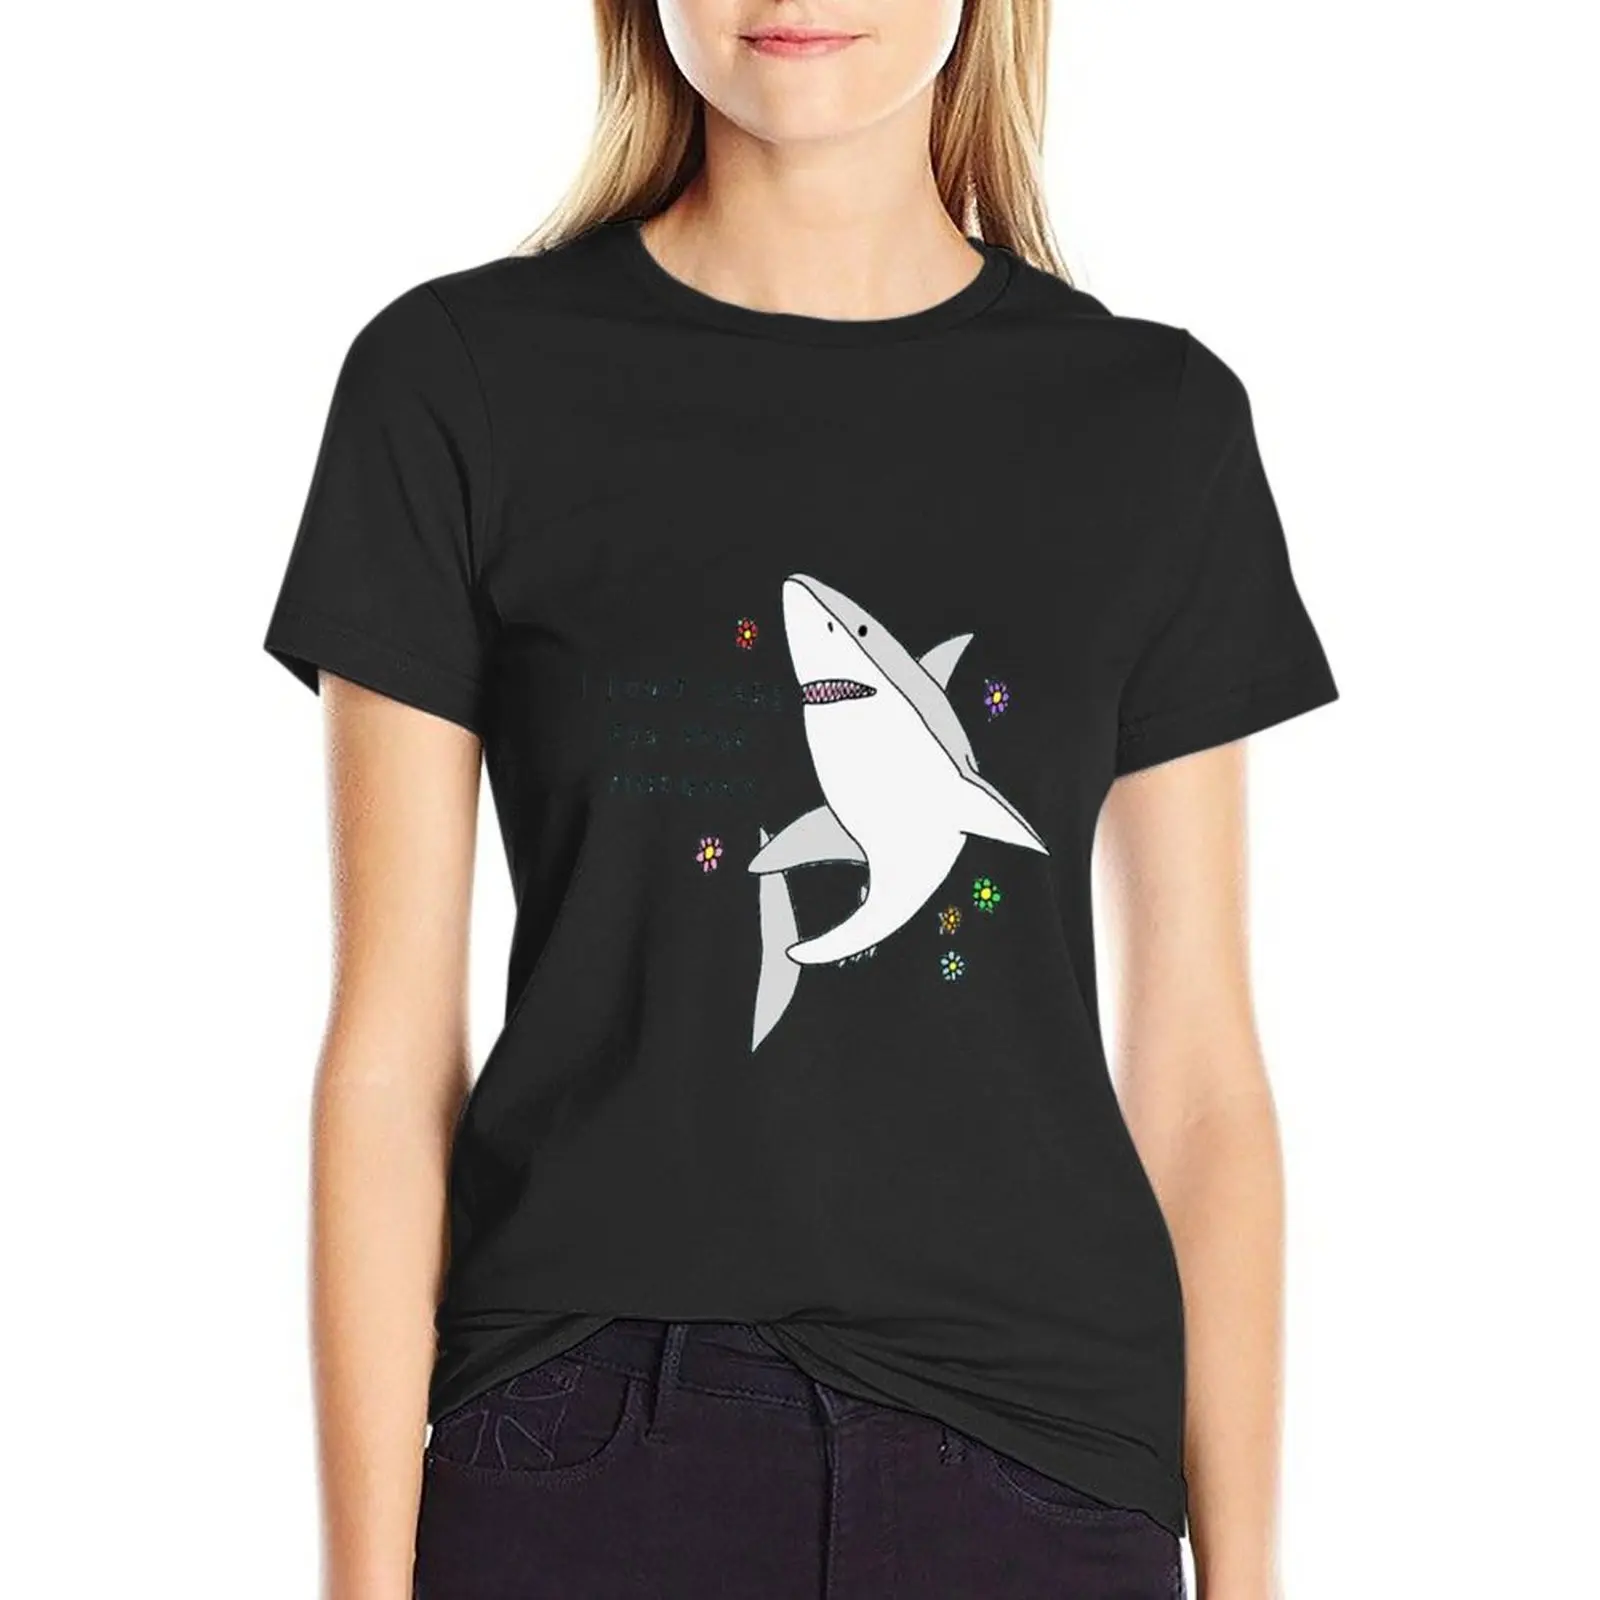 Футболка с изображением акулы-женоненавистника, одежда в стиле аниме, футболки в стиле вестерн для женщин